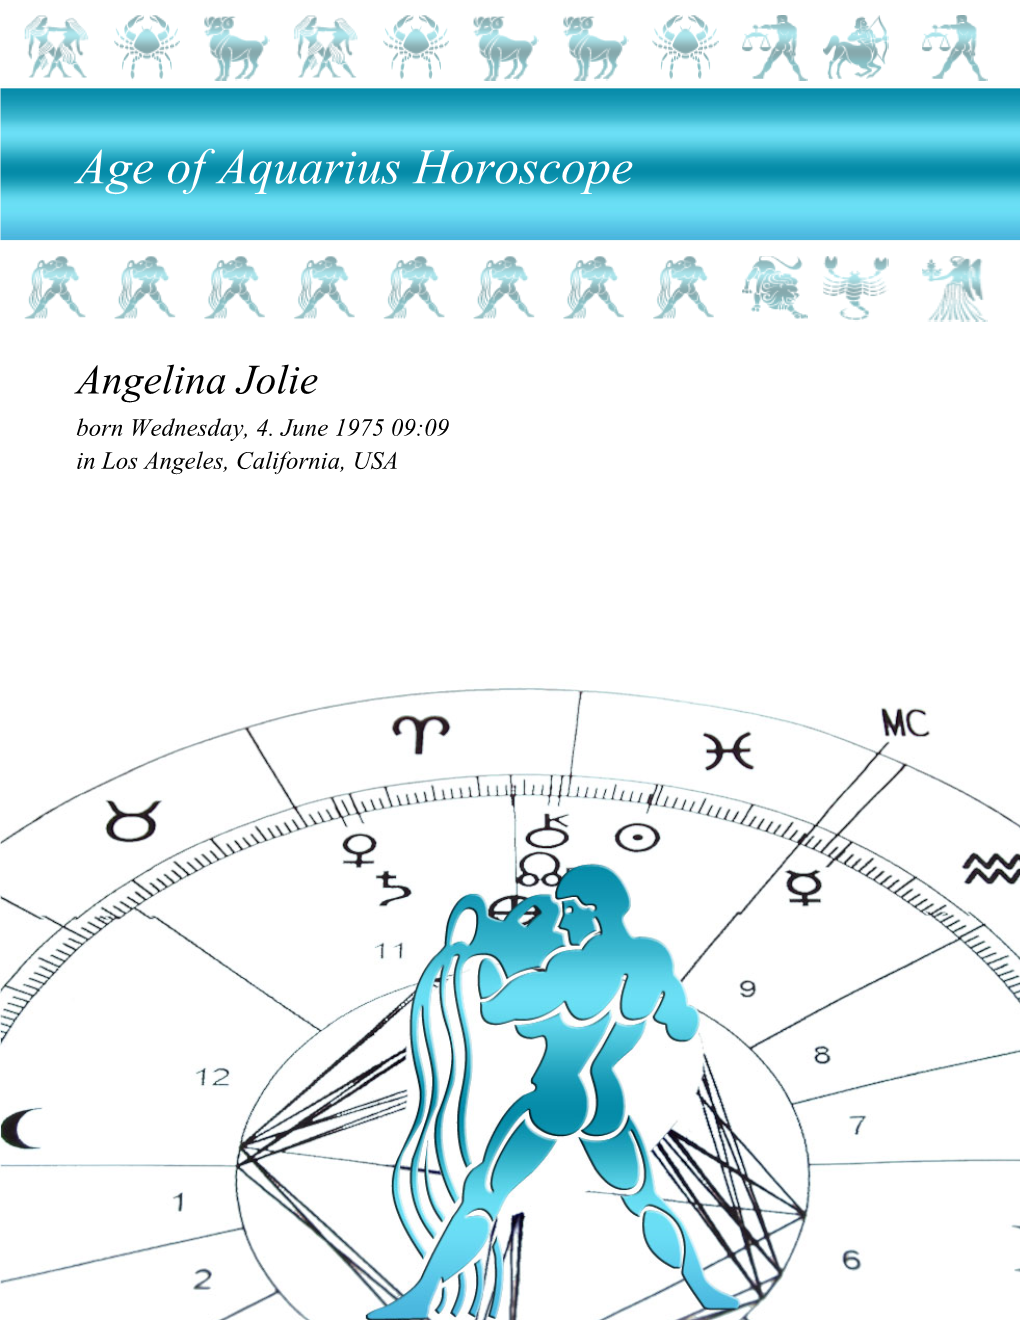 Age of Aquarius Horoscope for Angelina Jolie